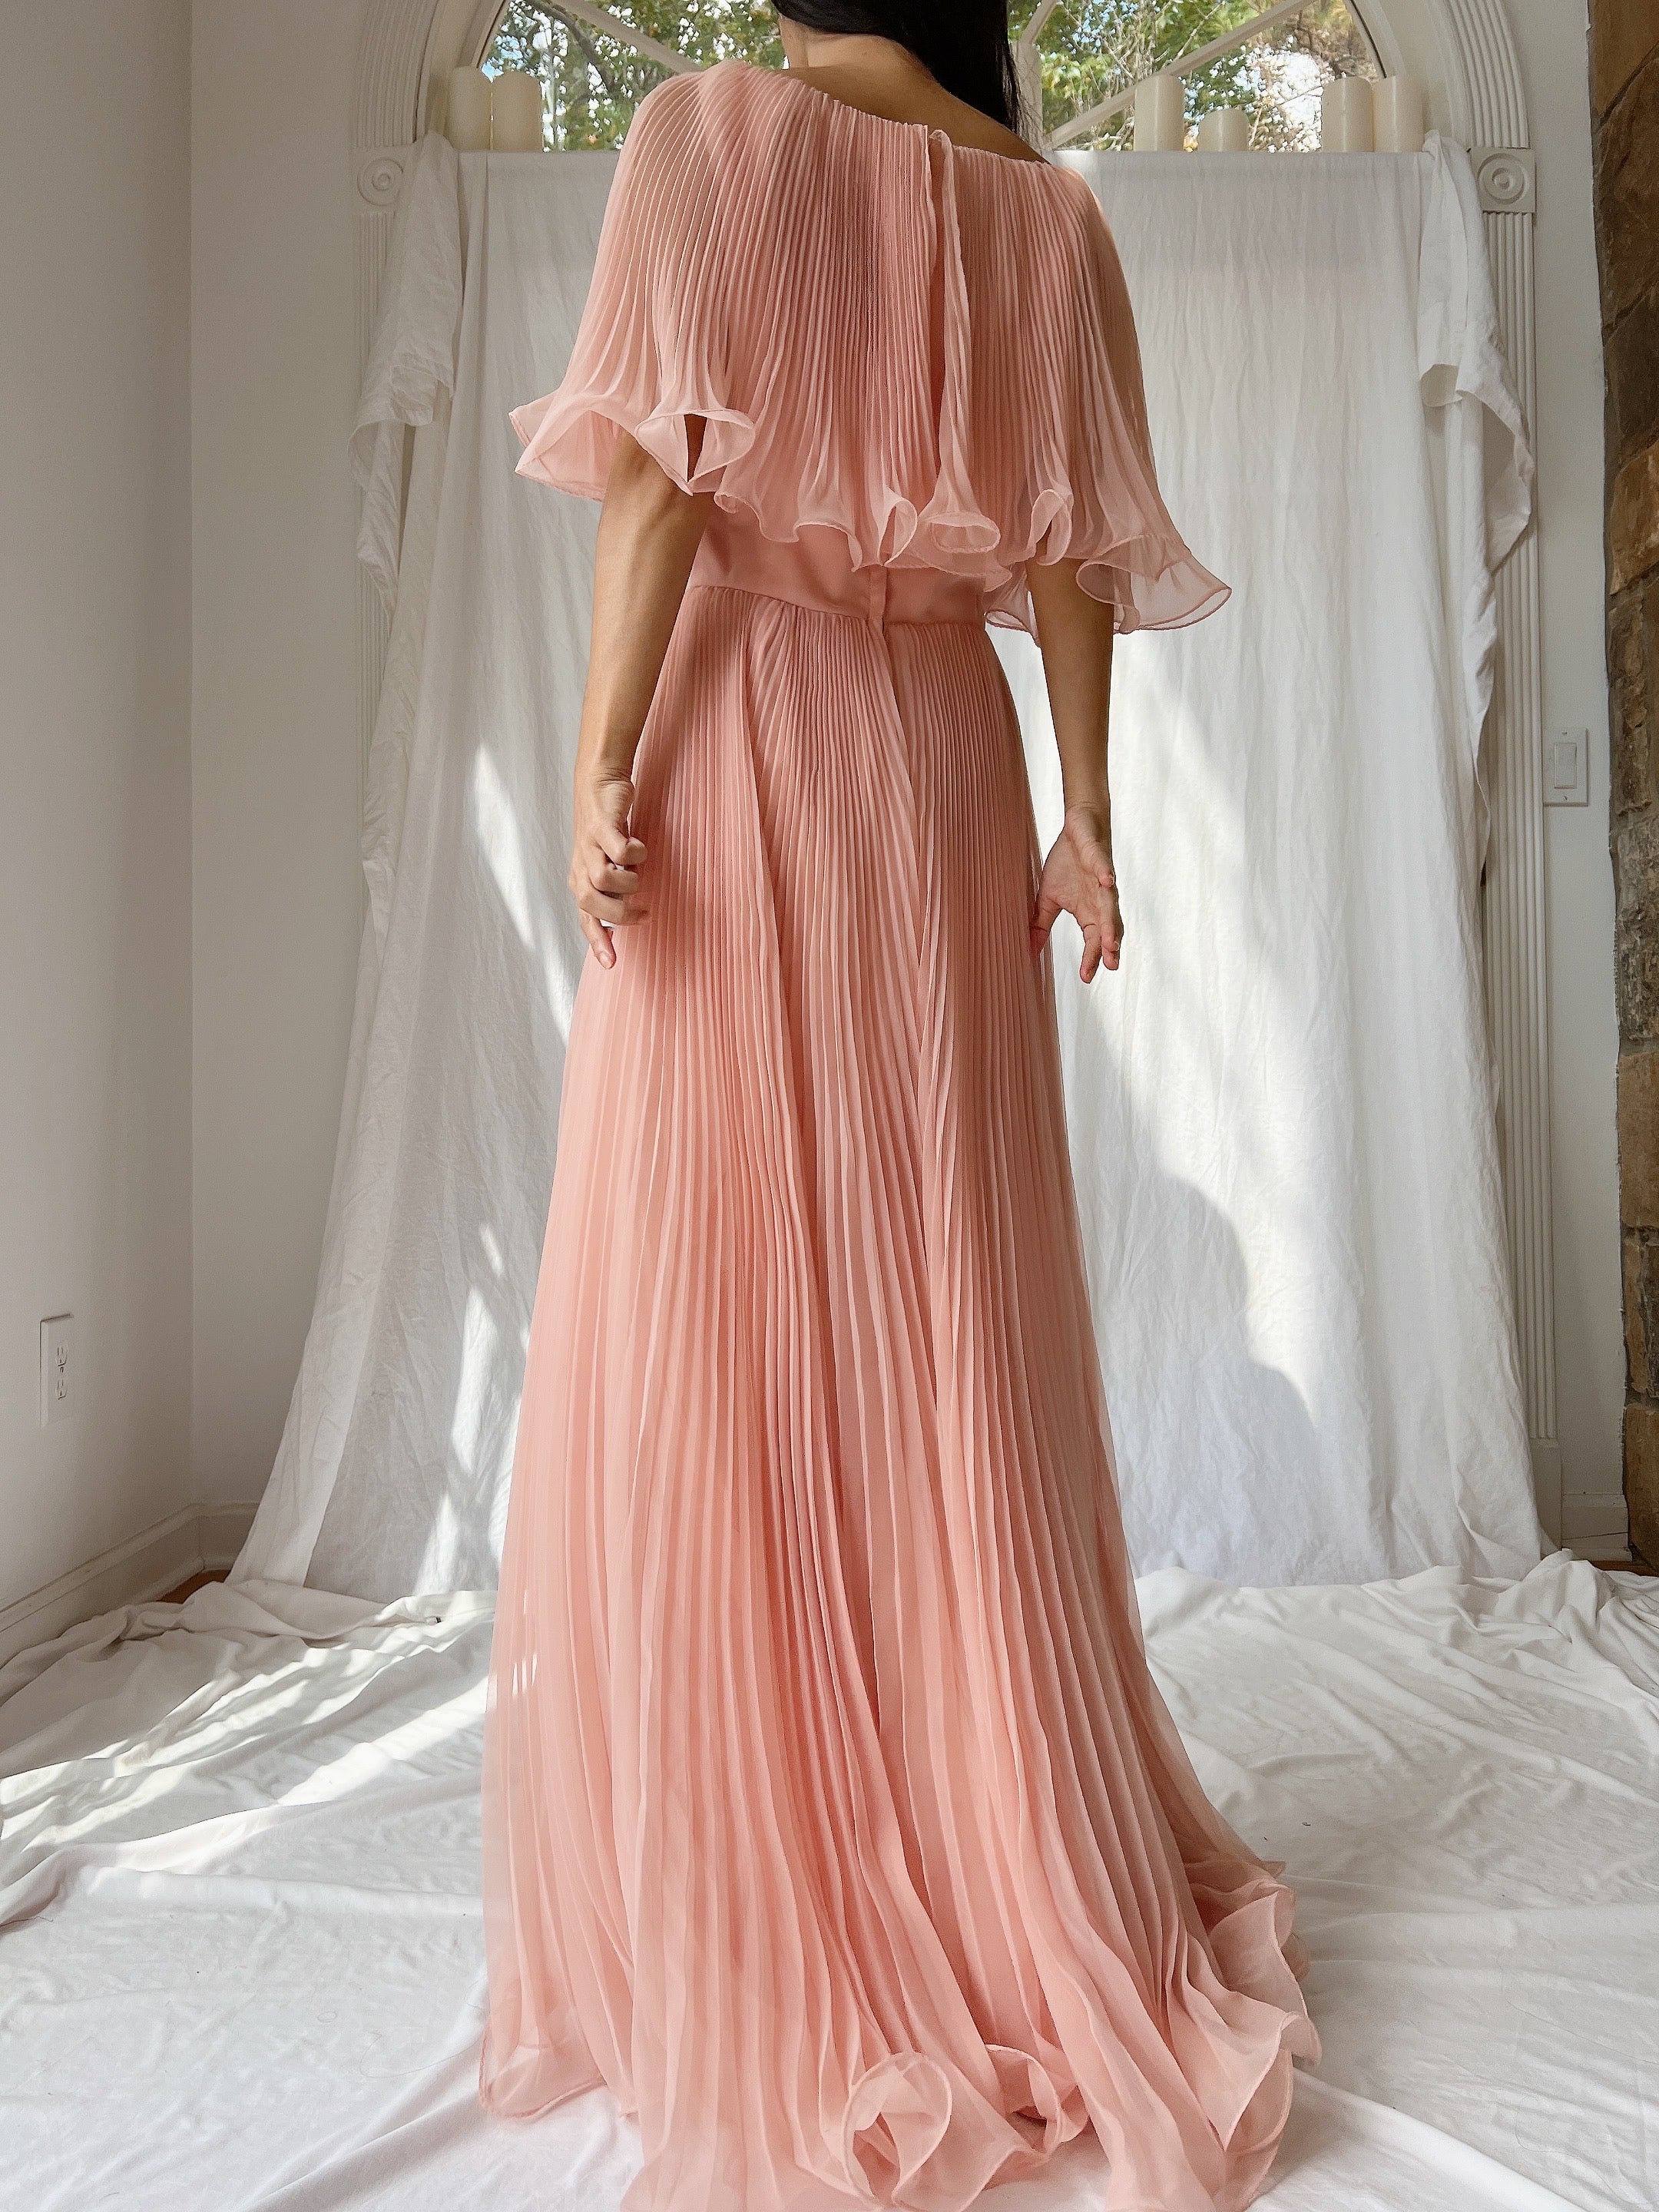 Vintage Peachy Pink Chiffon Dress - S